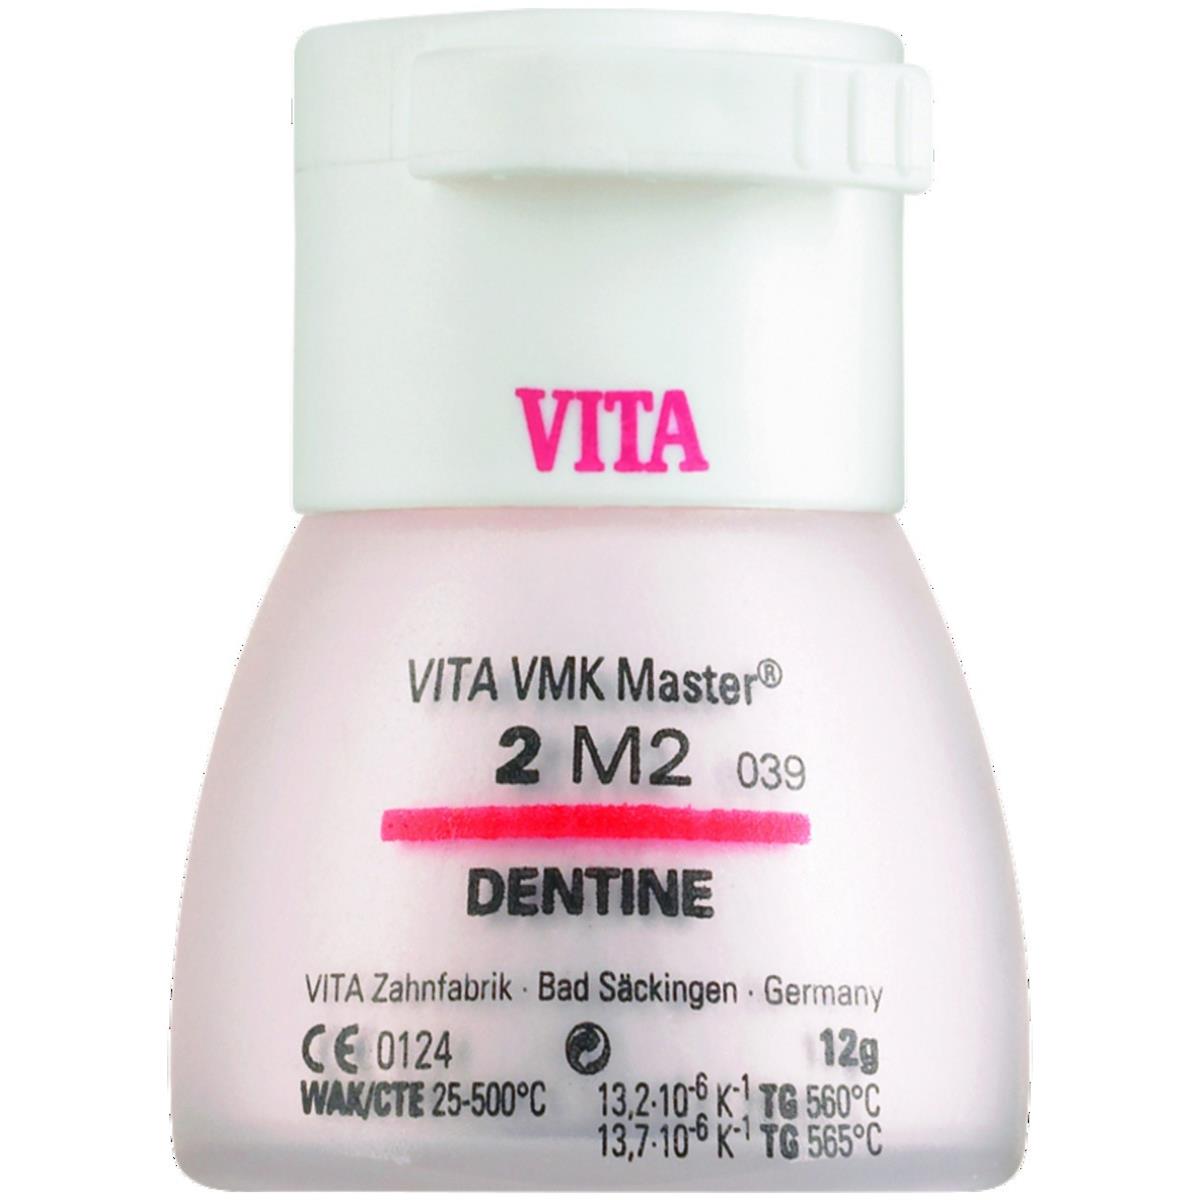 VMK Master VITA - Dentine - 4L2,5 - Le flacon de 12 g